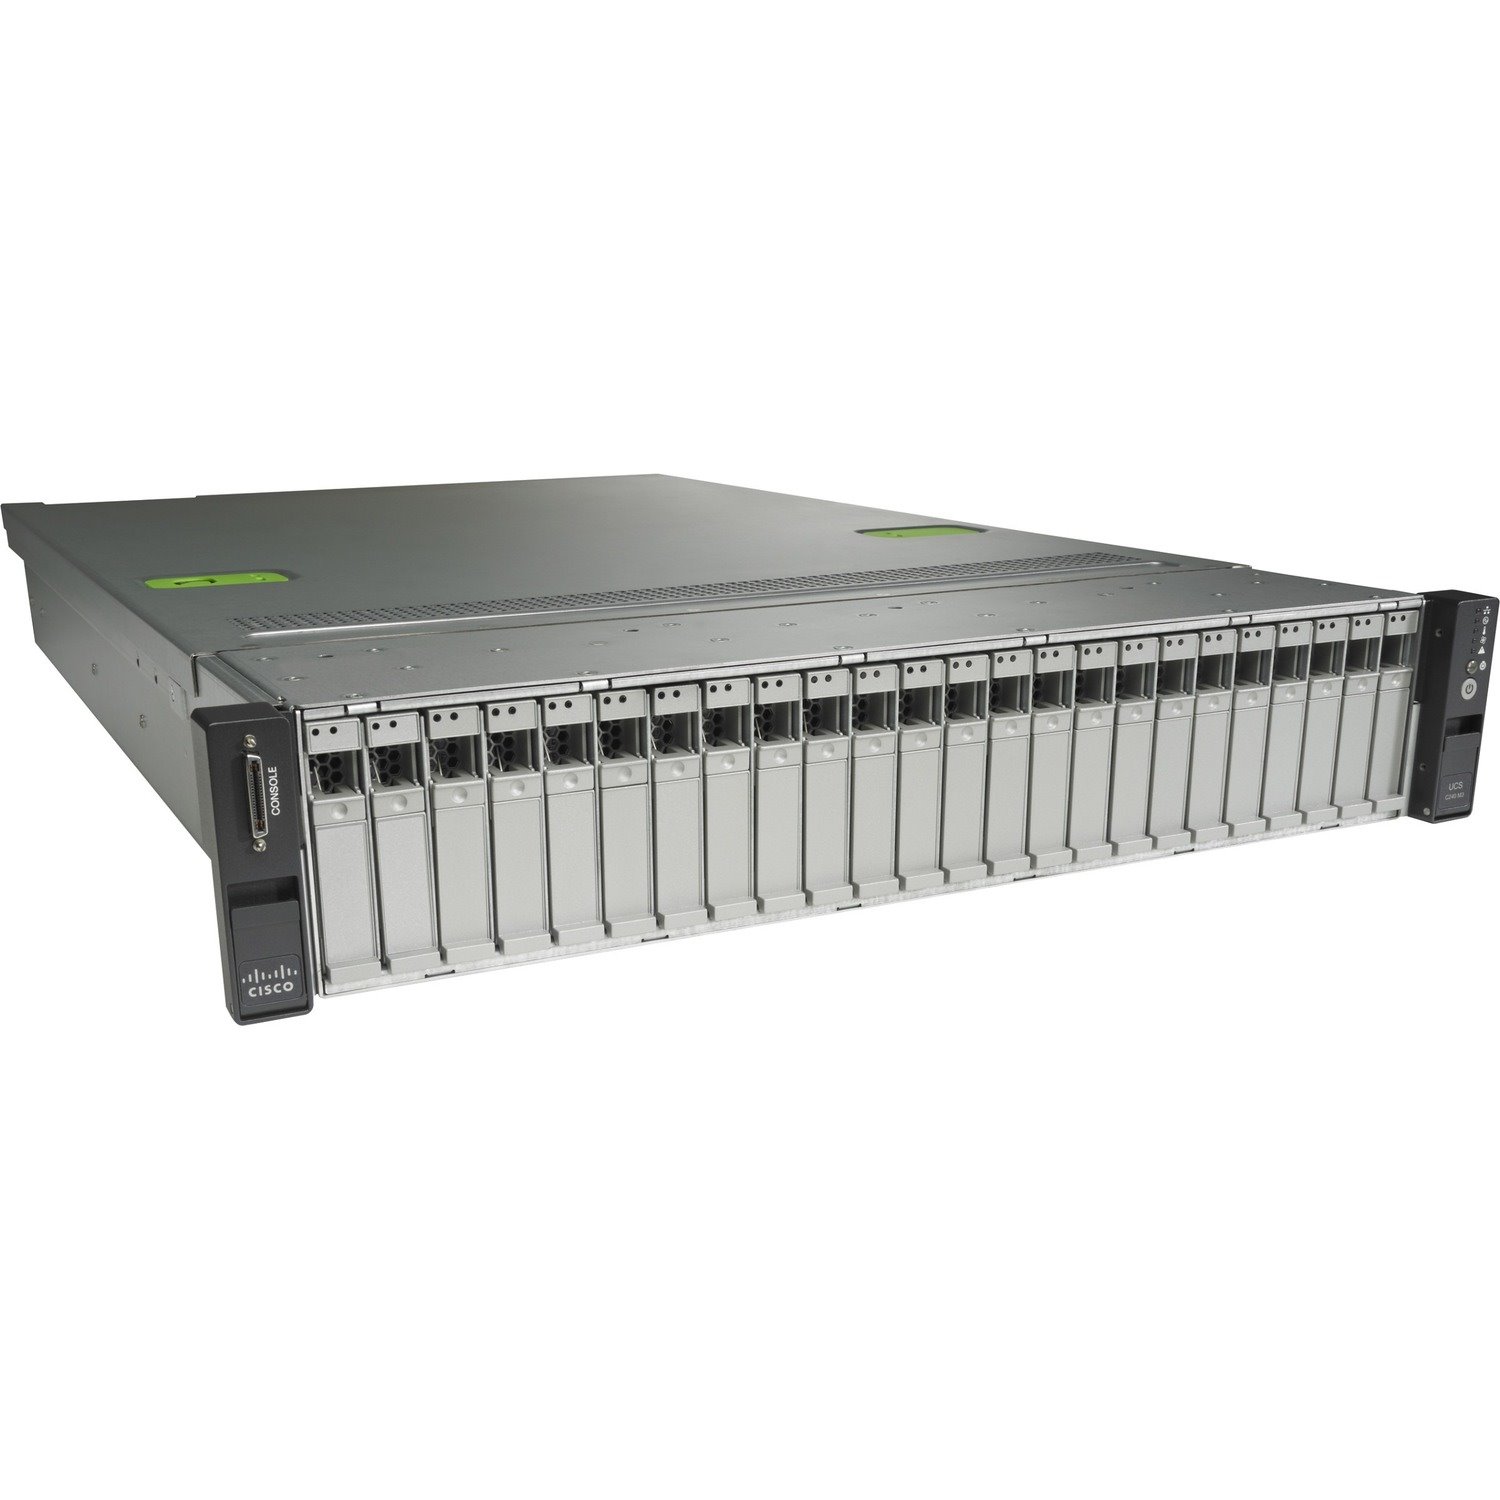 Cisco C240 M3 2U Rack Server - 2 x Intel Xeon E5-2650 2 GHz - 16 GB RAM - Serial ATA/600, 6Gb/s SAS Controller - Refurbished